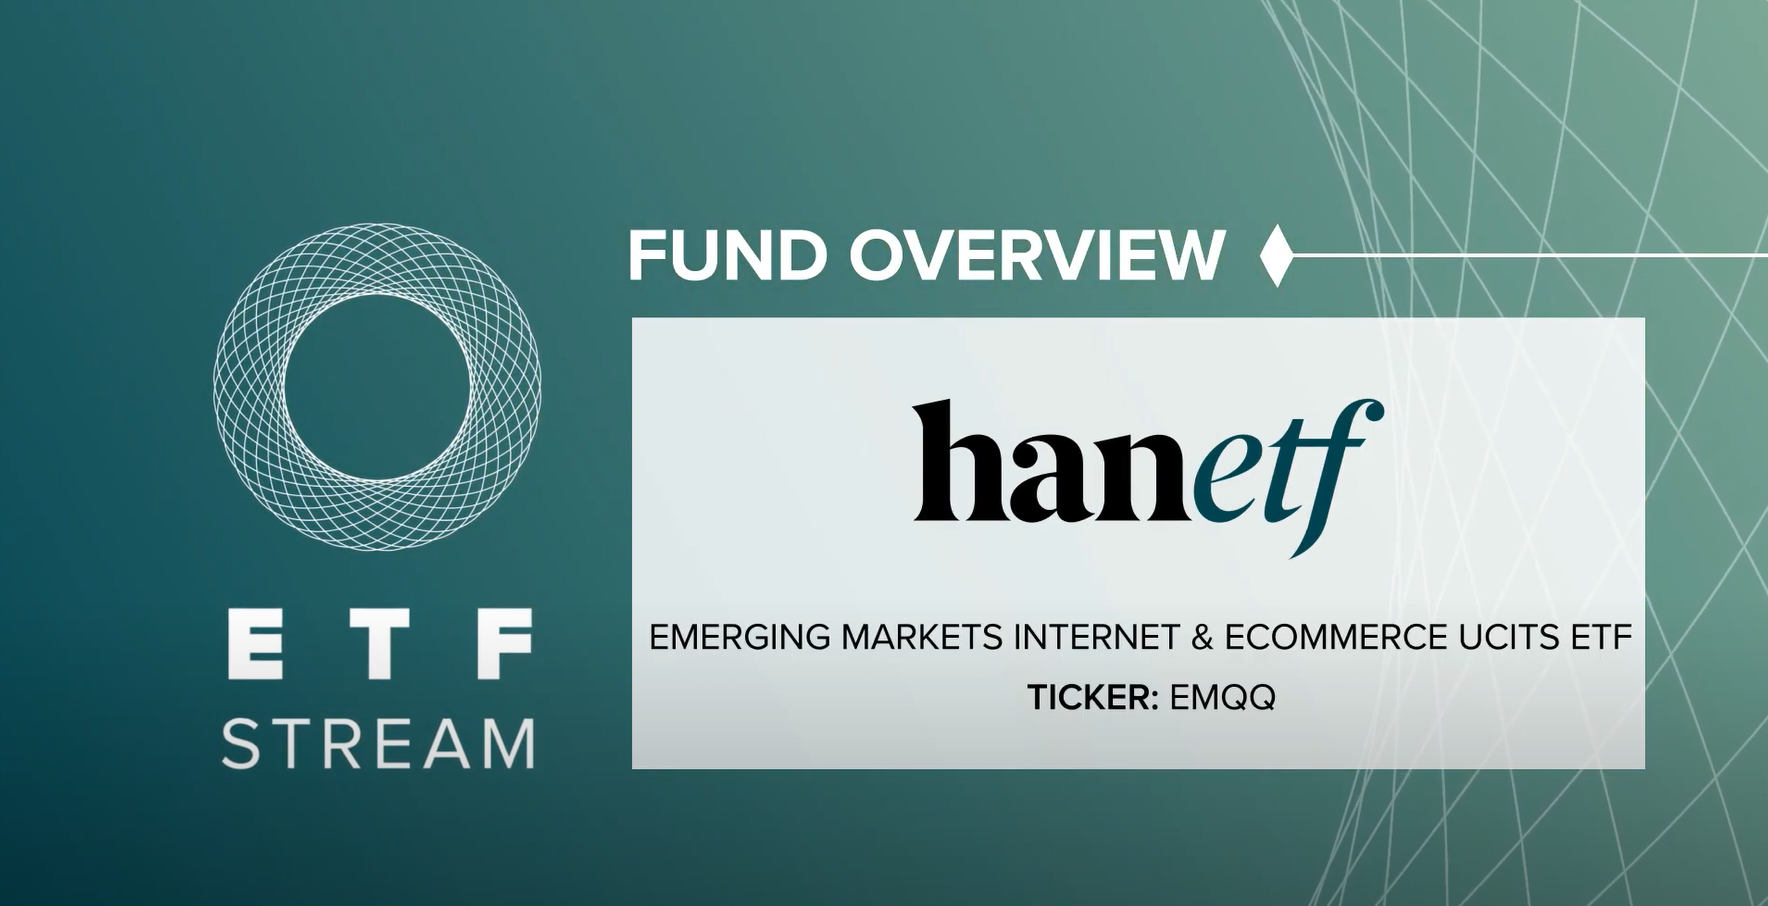 Fund Overview Video EMQQ Emerging Markets Internet & Ecommerce UCITS ETF